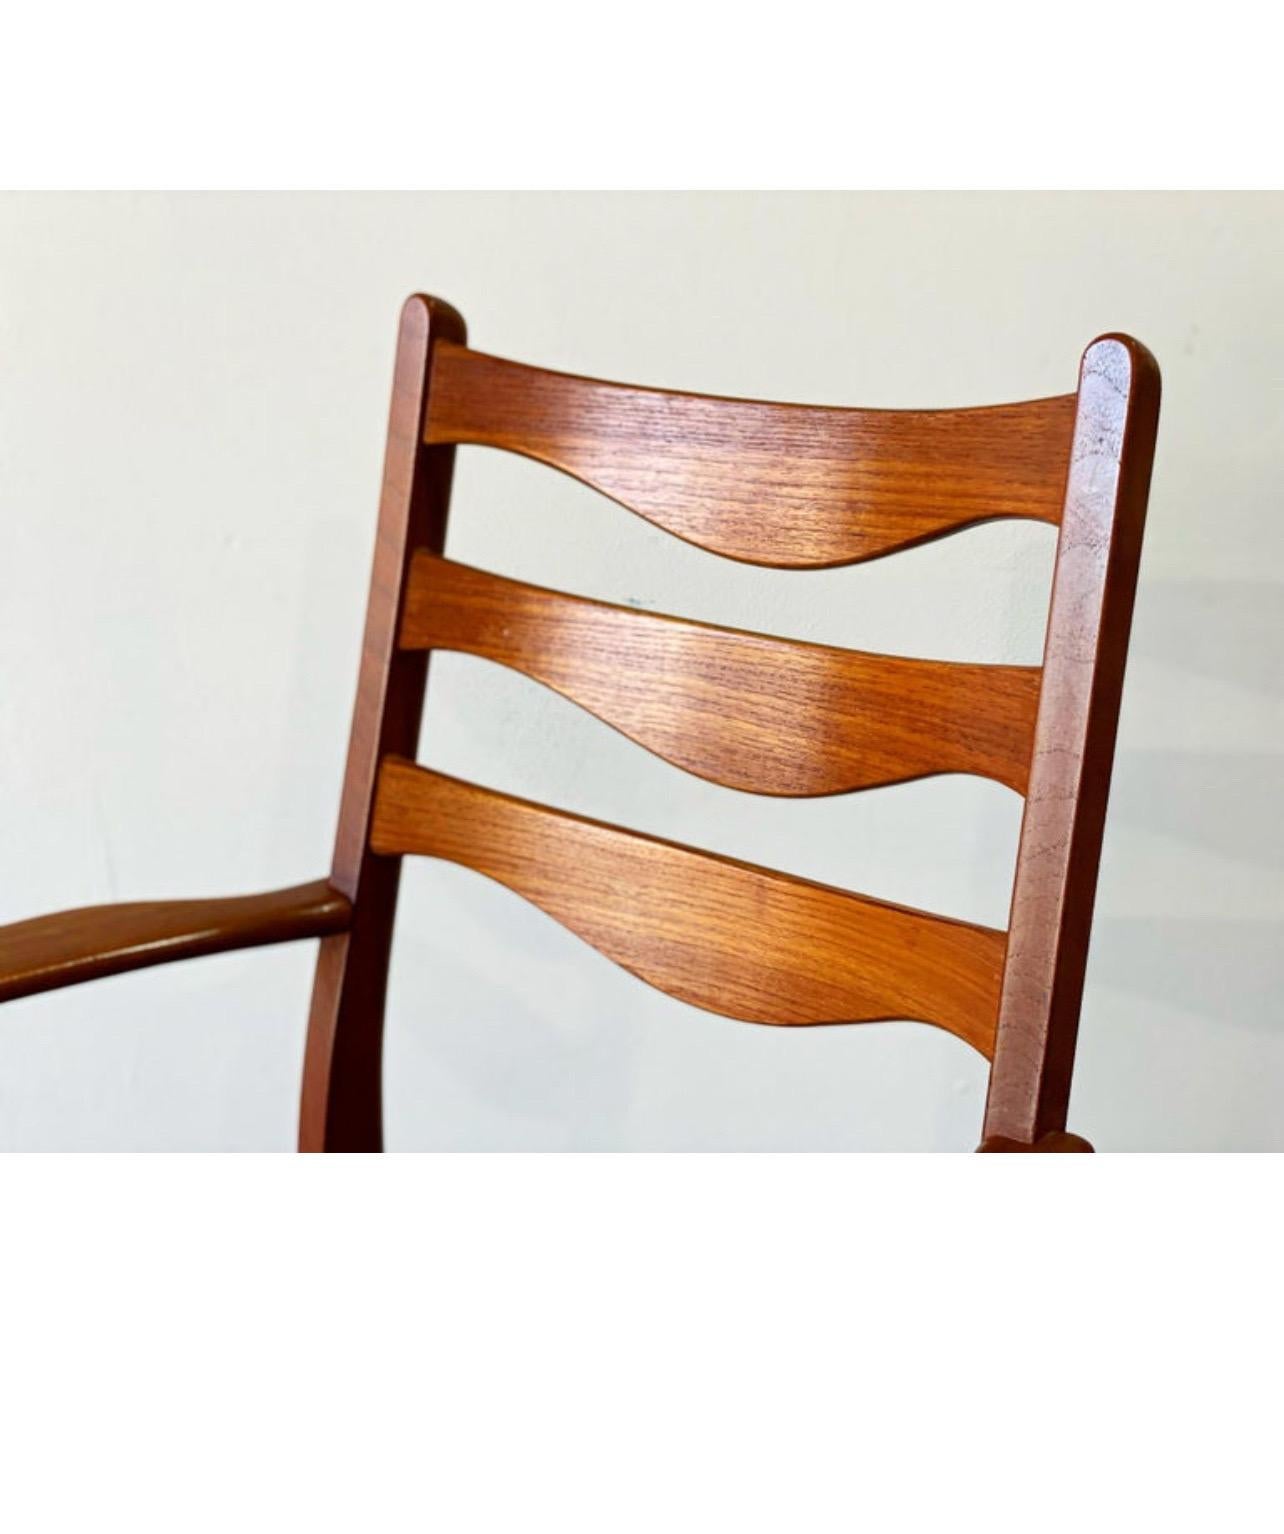  Set of 8, Midcentury Danish Modern by Arne Wahl Iversen Dining Chairs in Teak 8